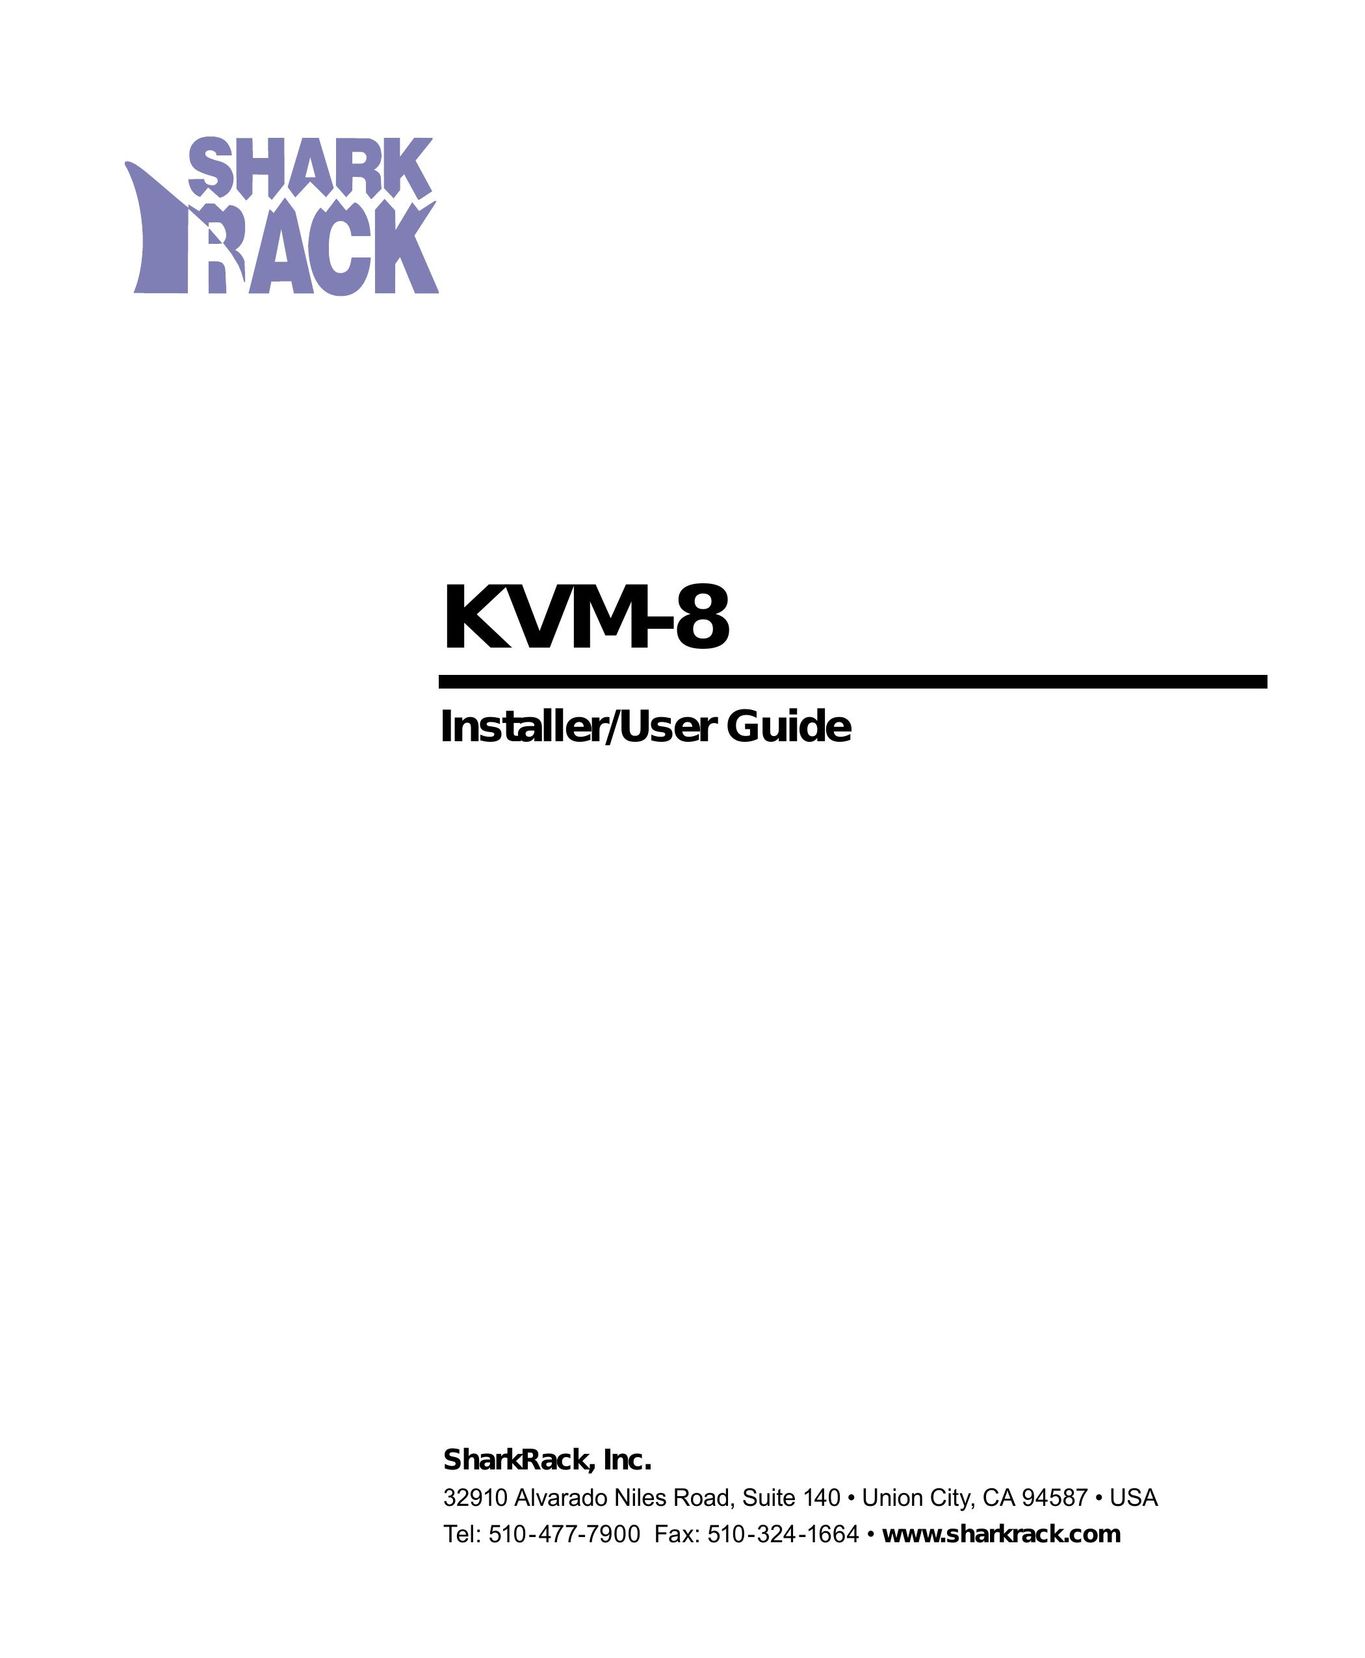 SharkRack KVM-8 Switch User Manual